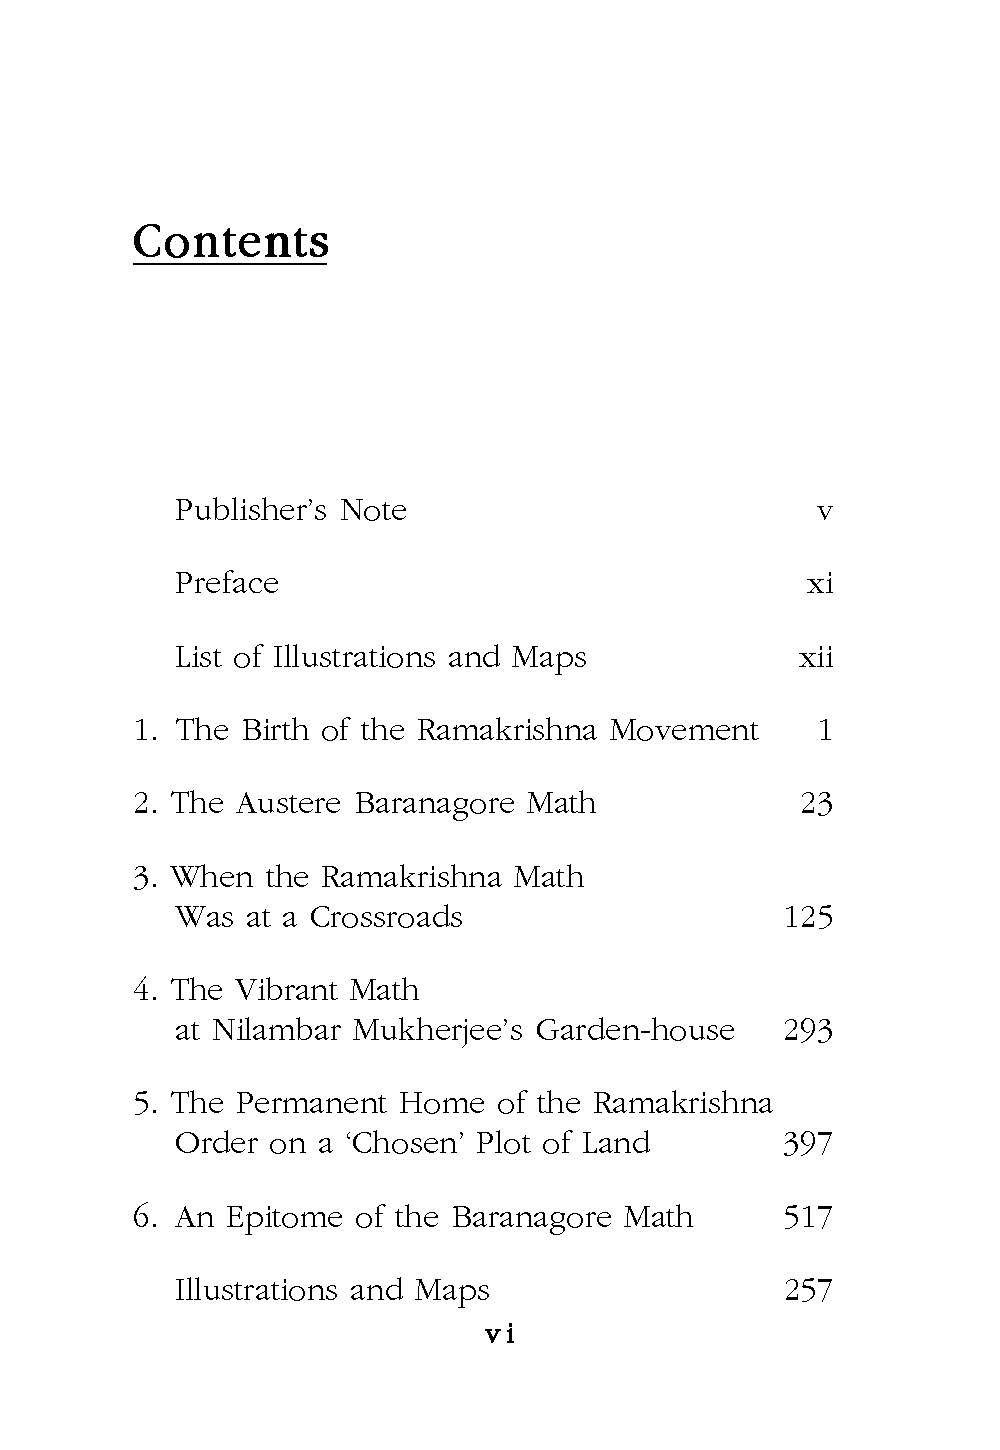 The Early History of the Ramakrishna Movement